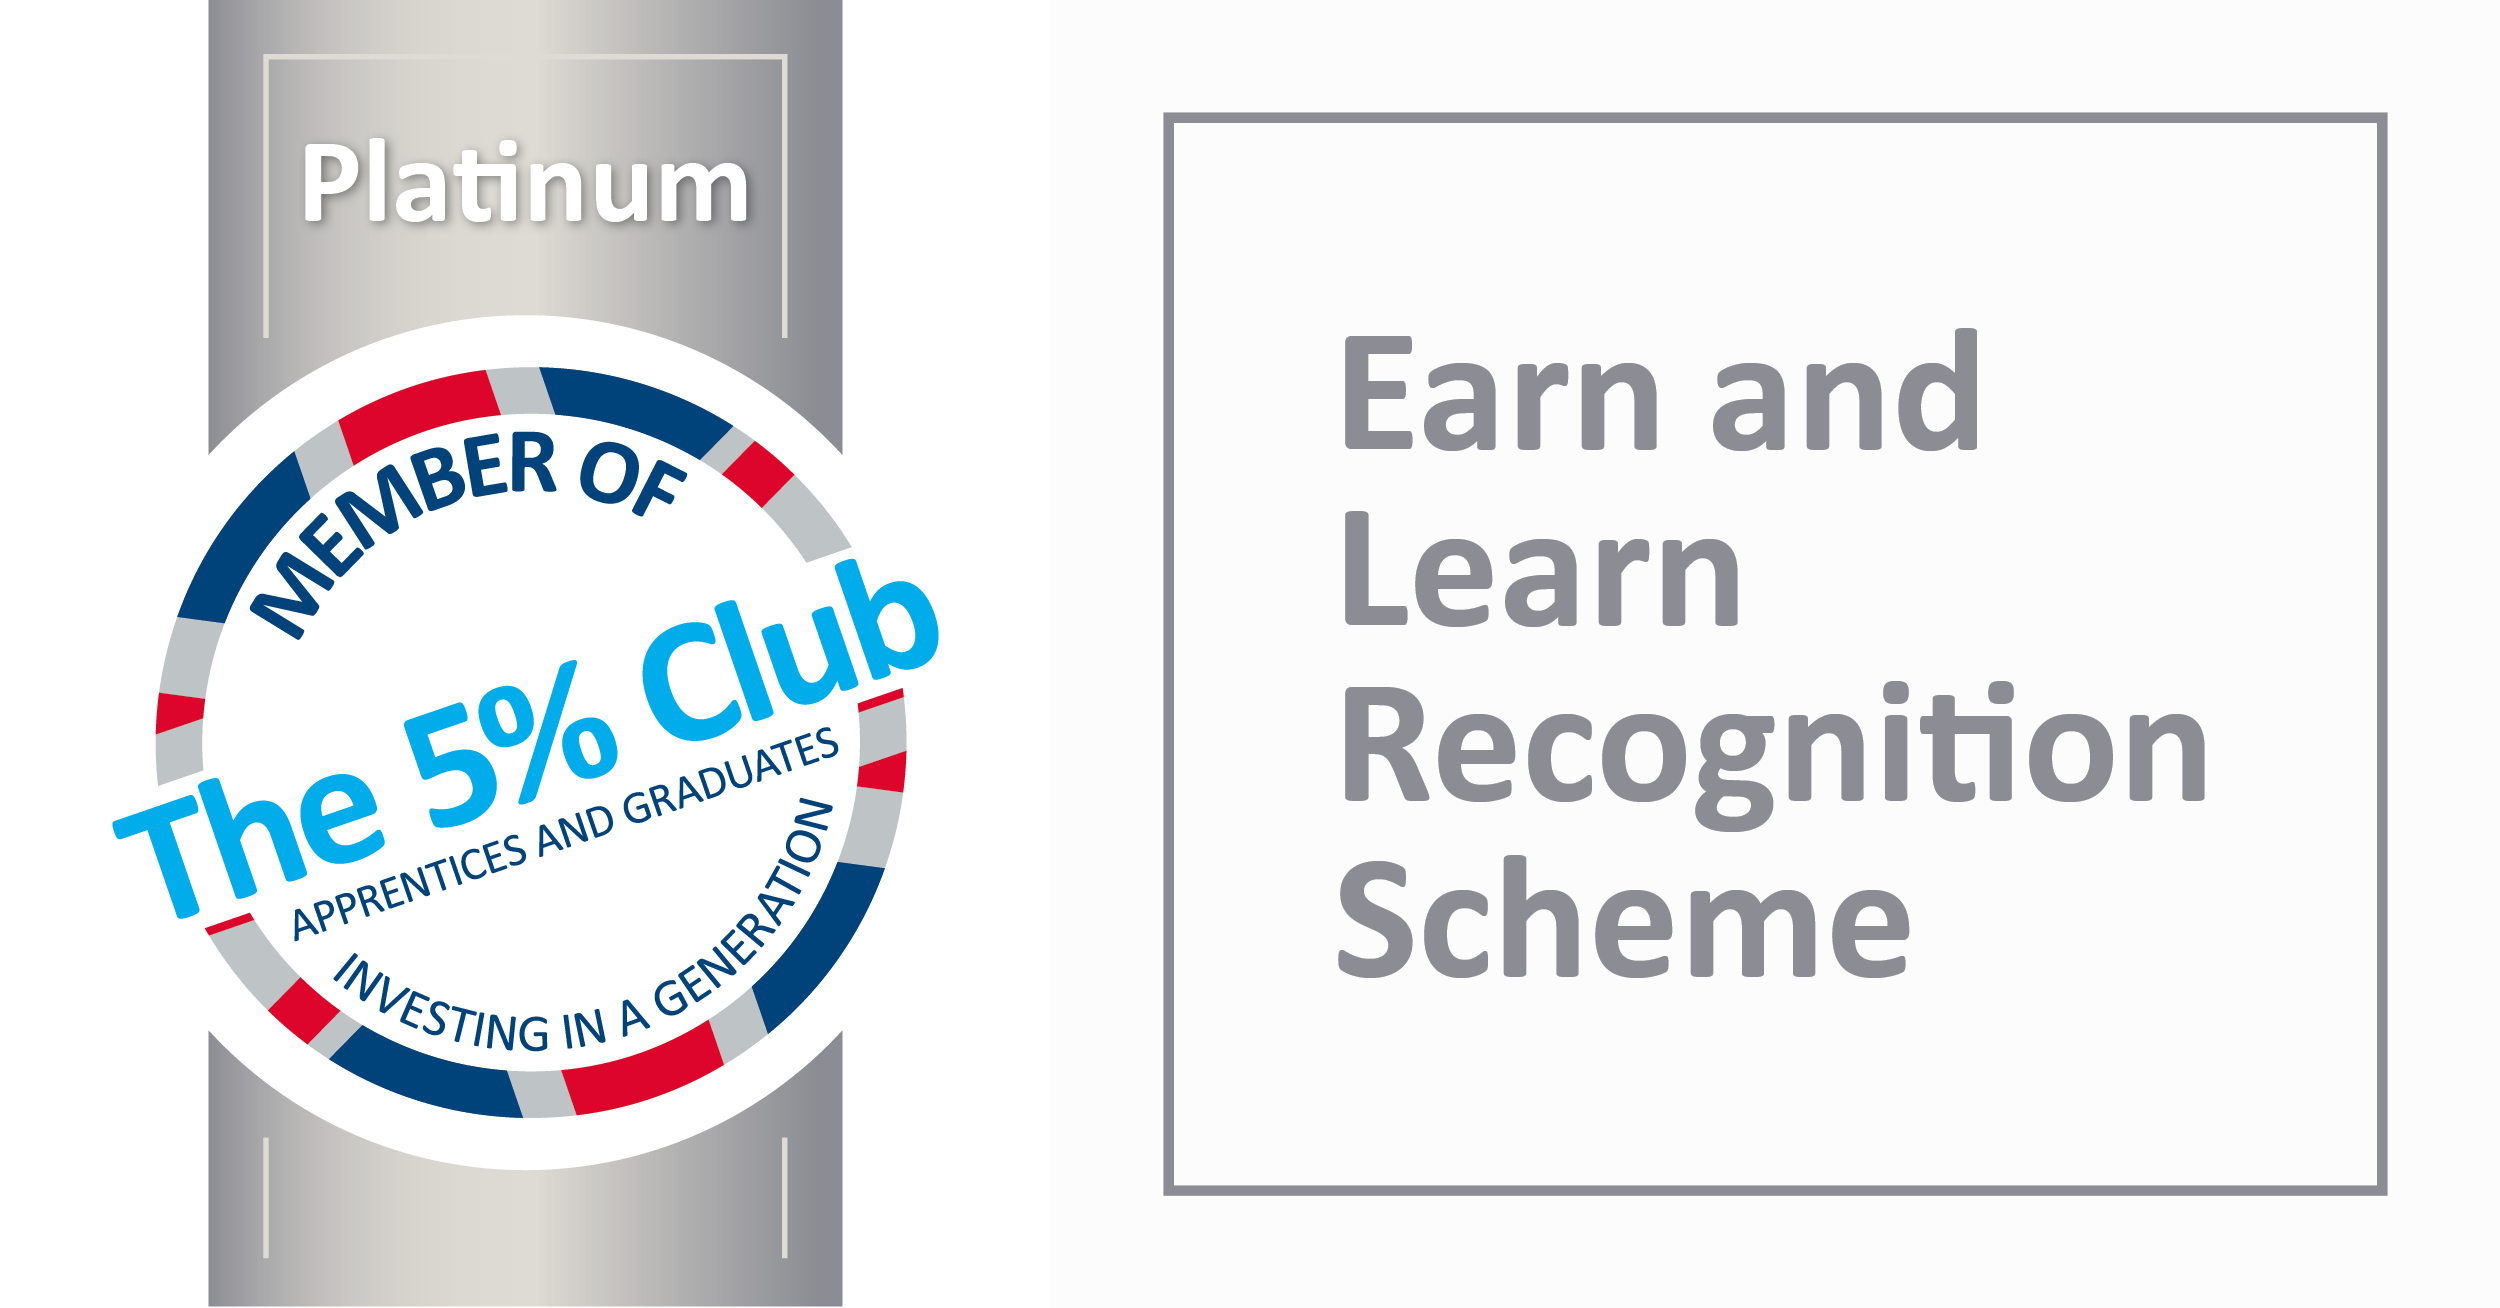 GRAHAM awarded Platinum Membership of the 5% club image